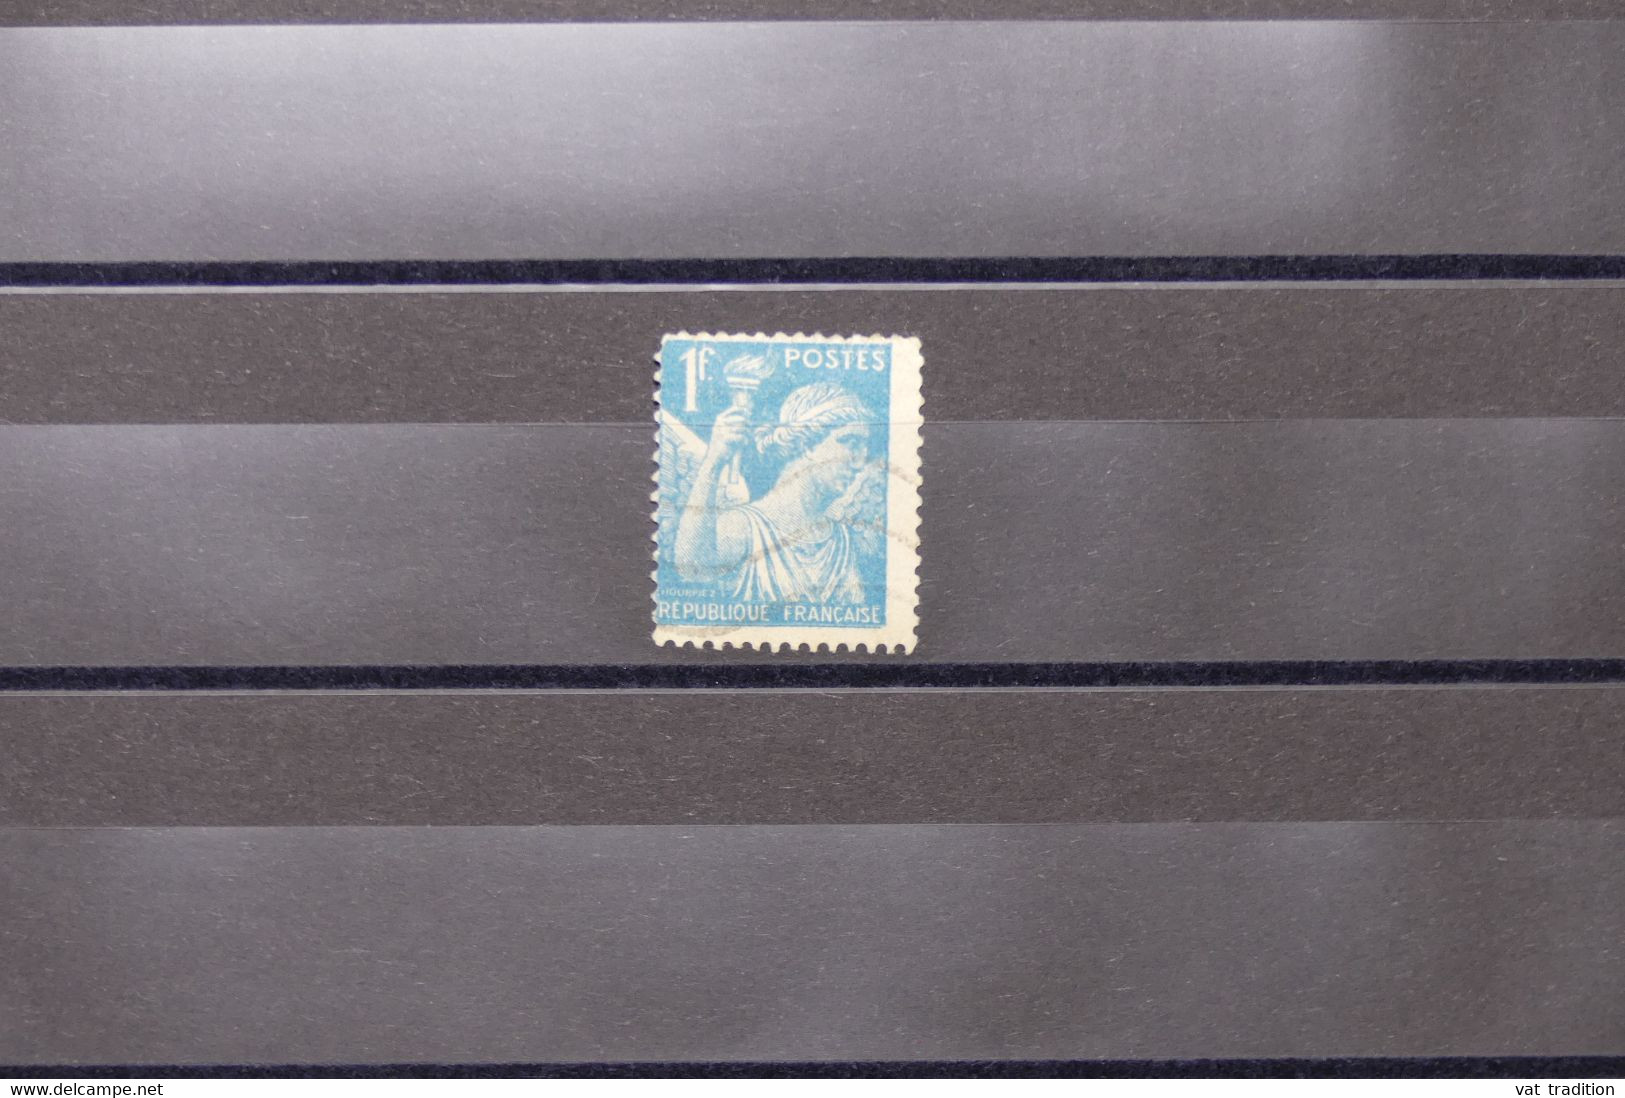 FRANCE - Variété - N° Yvert 650 - Type Iris - Papier Pelure - Oblitéré - L 74054 - Oblitérés